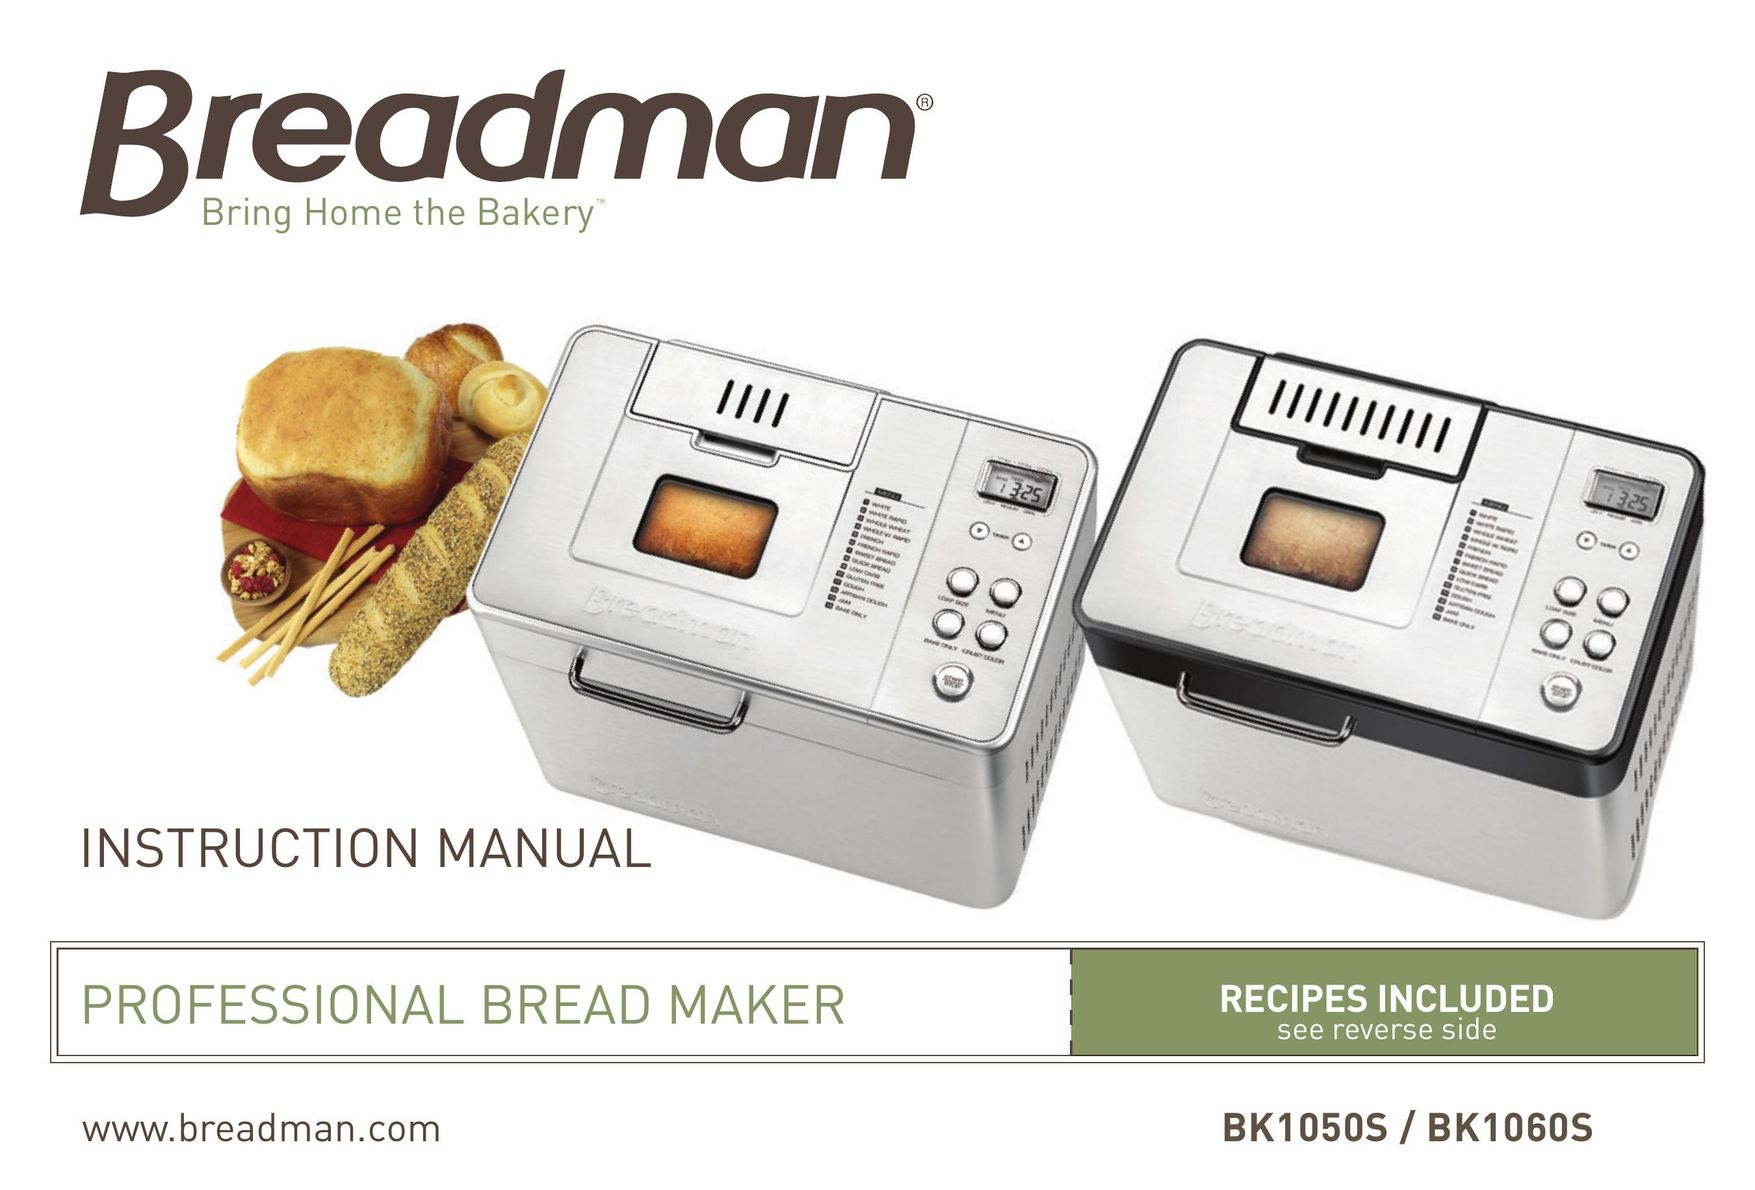 Breadman Professional Bread Maker Bread Maker User Manual